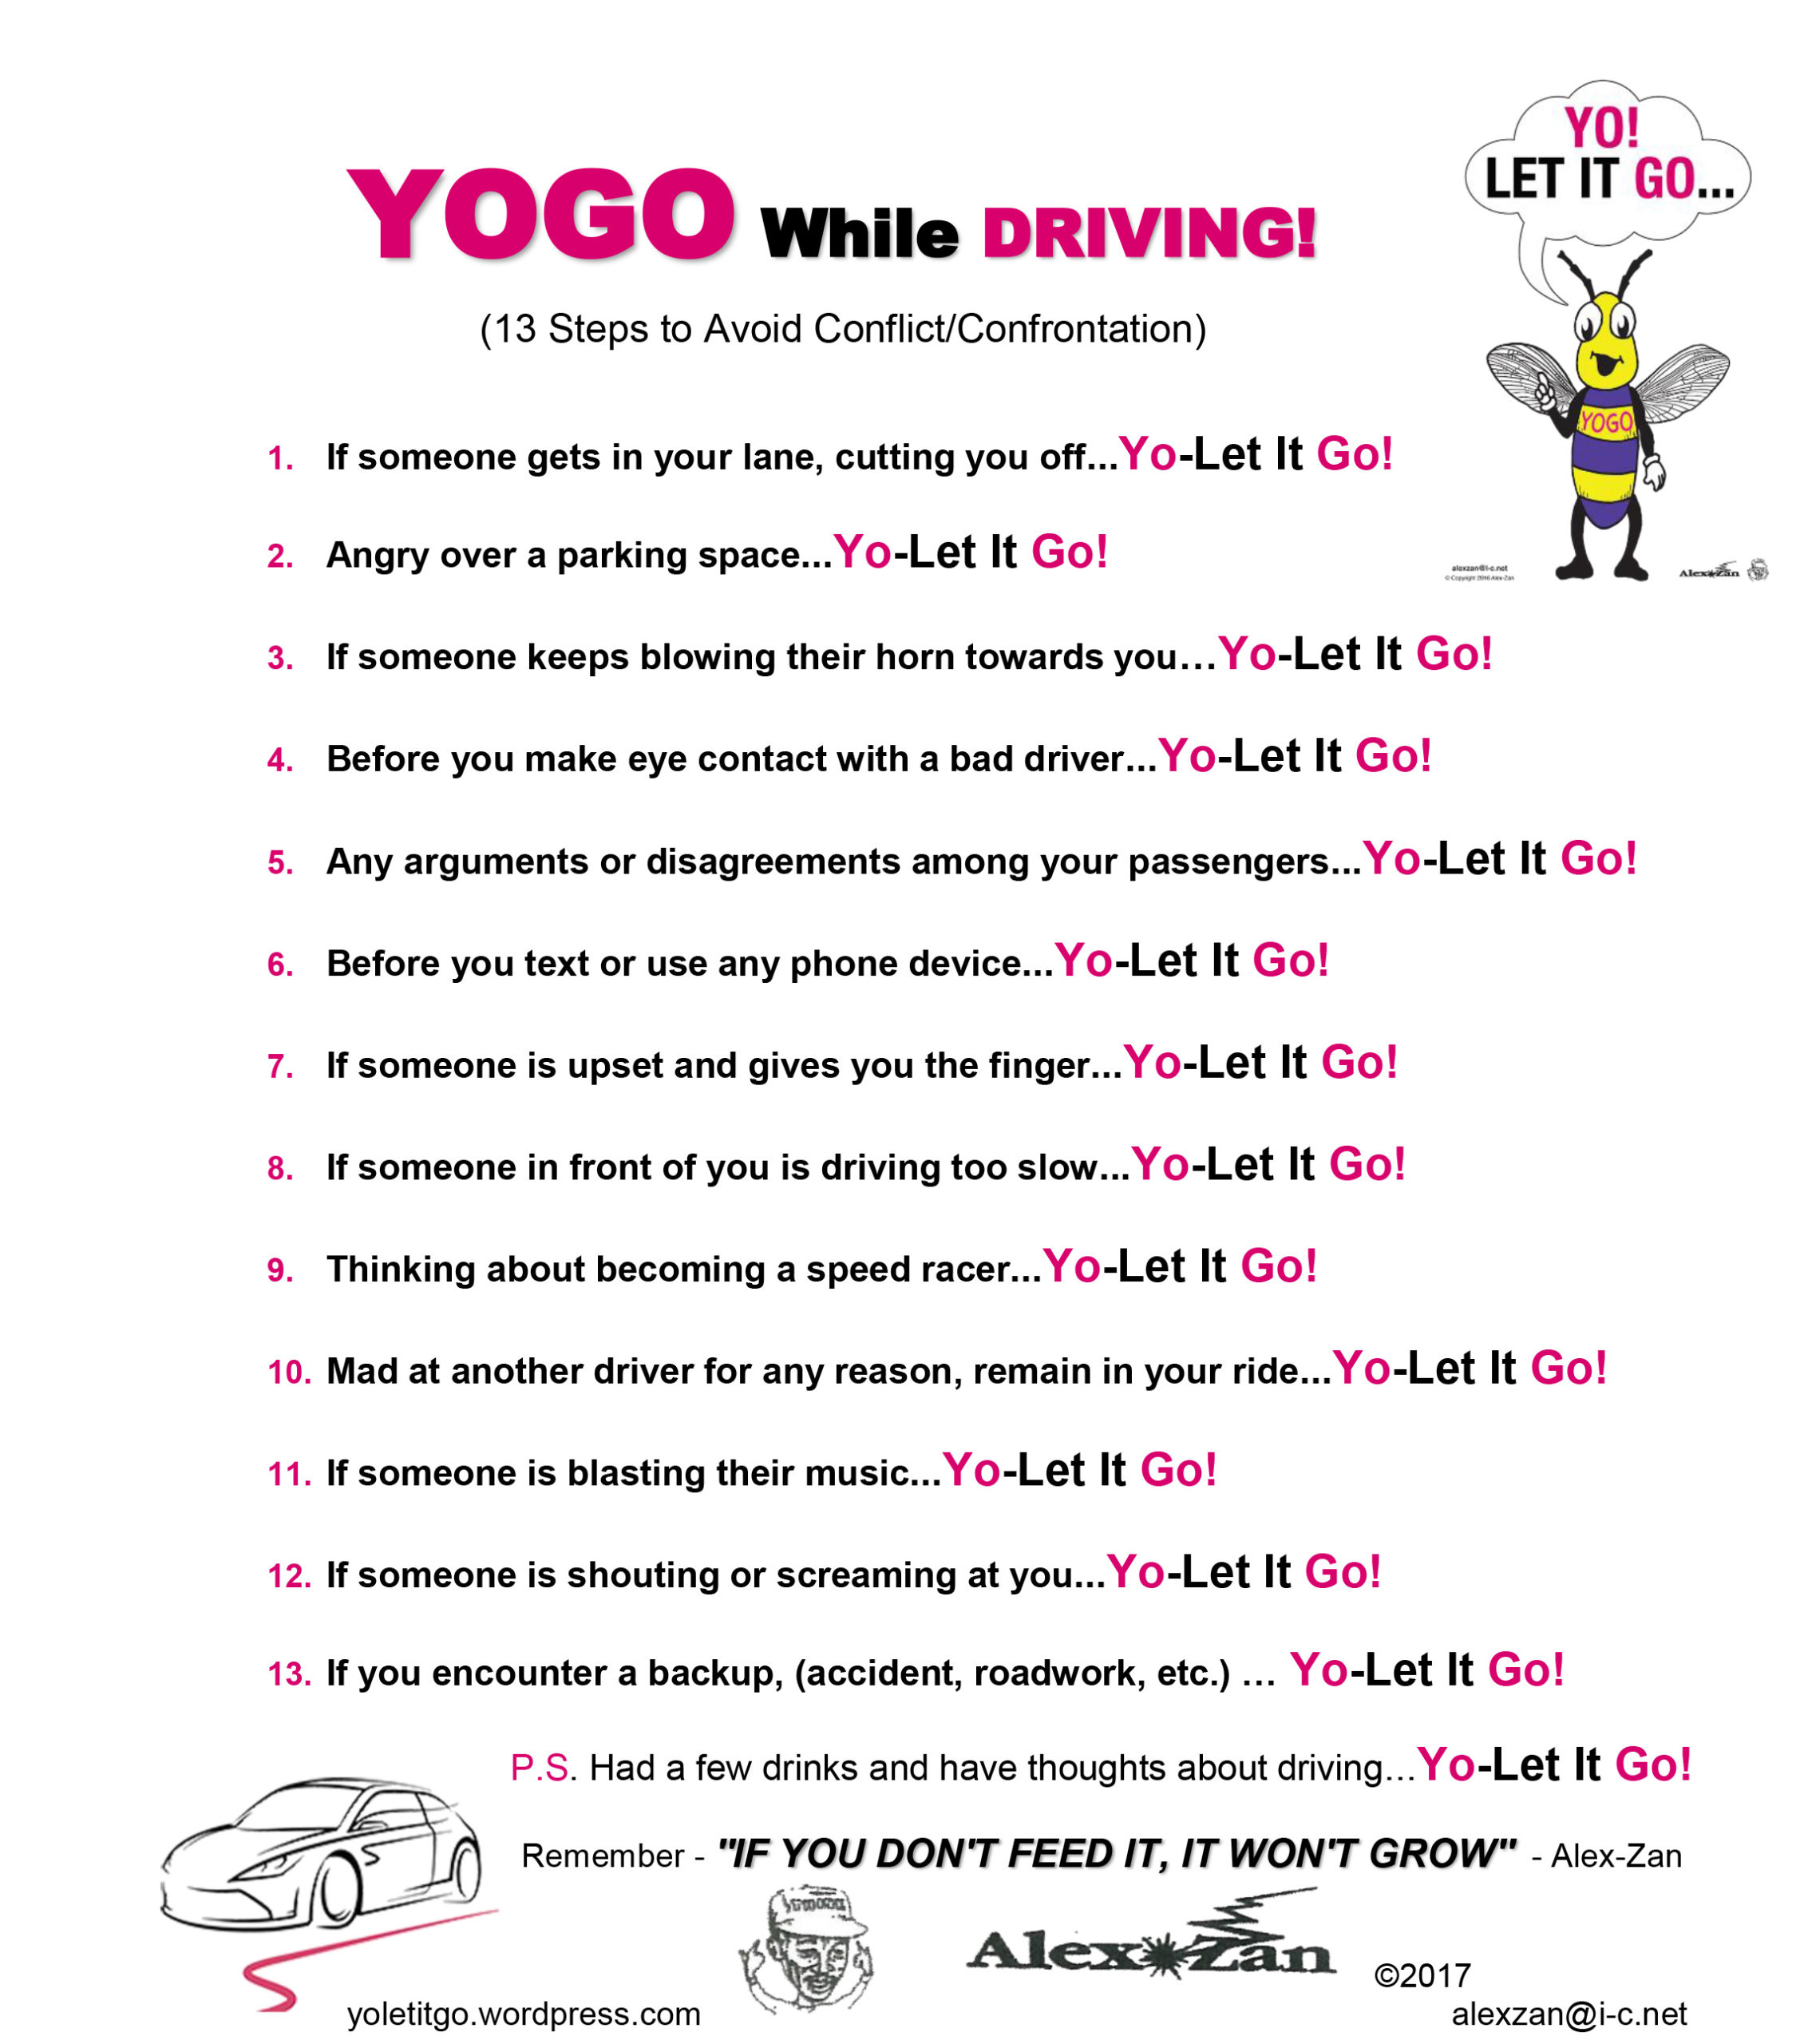 YOGO while Driving